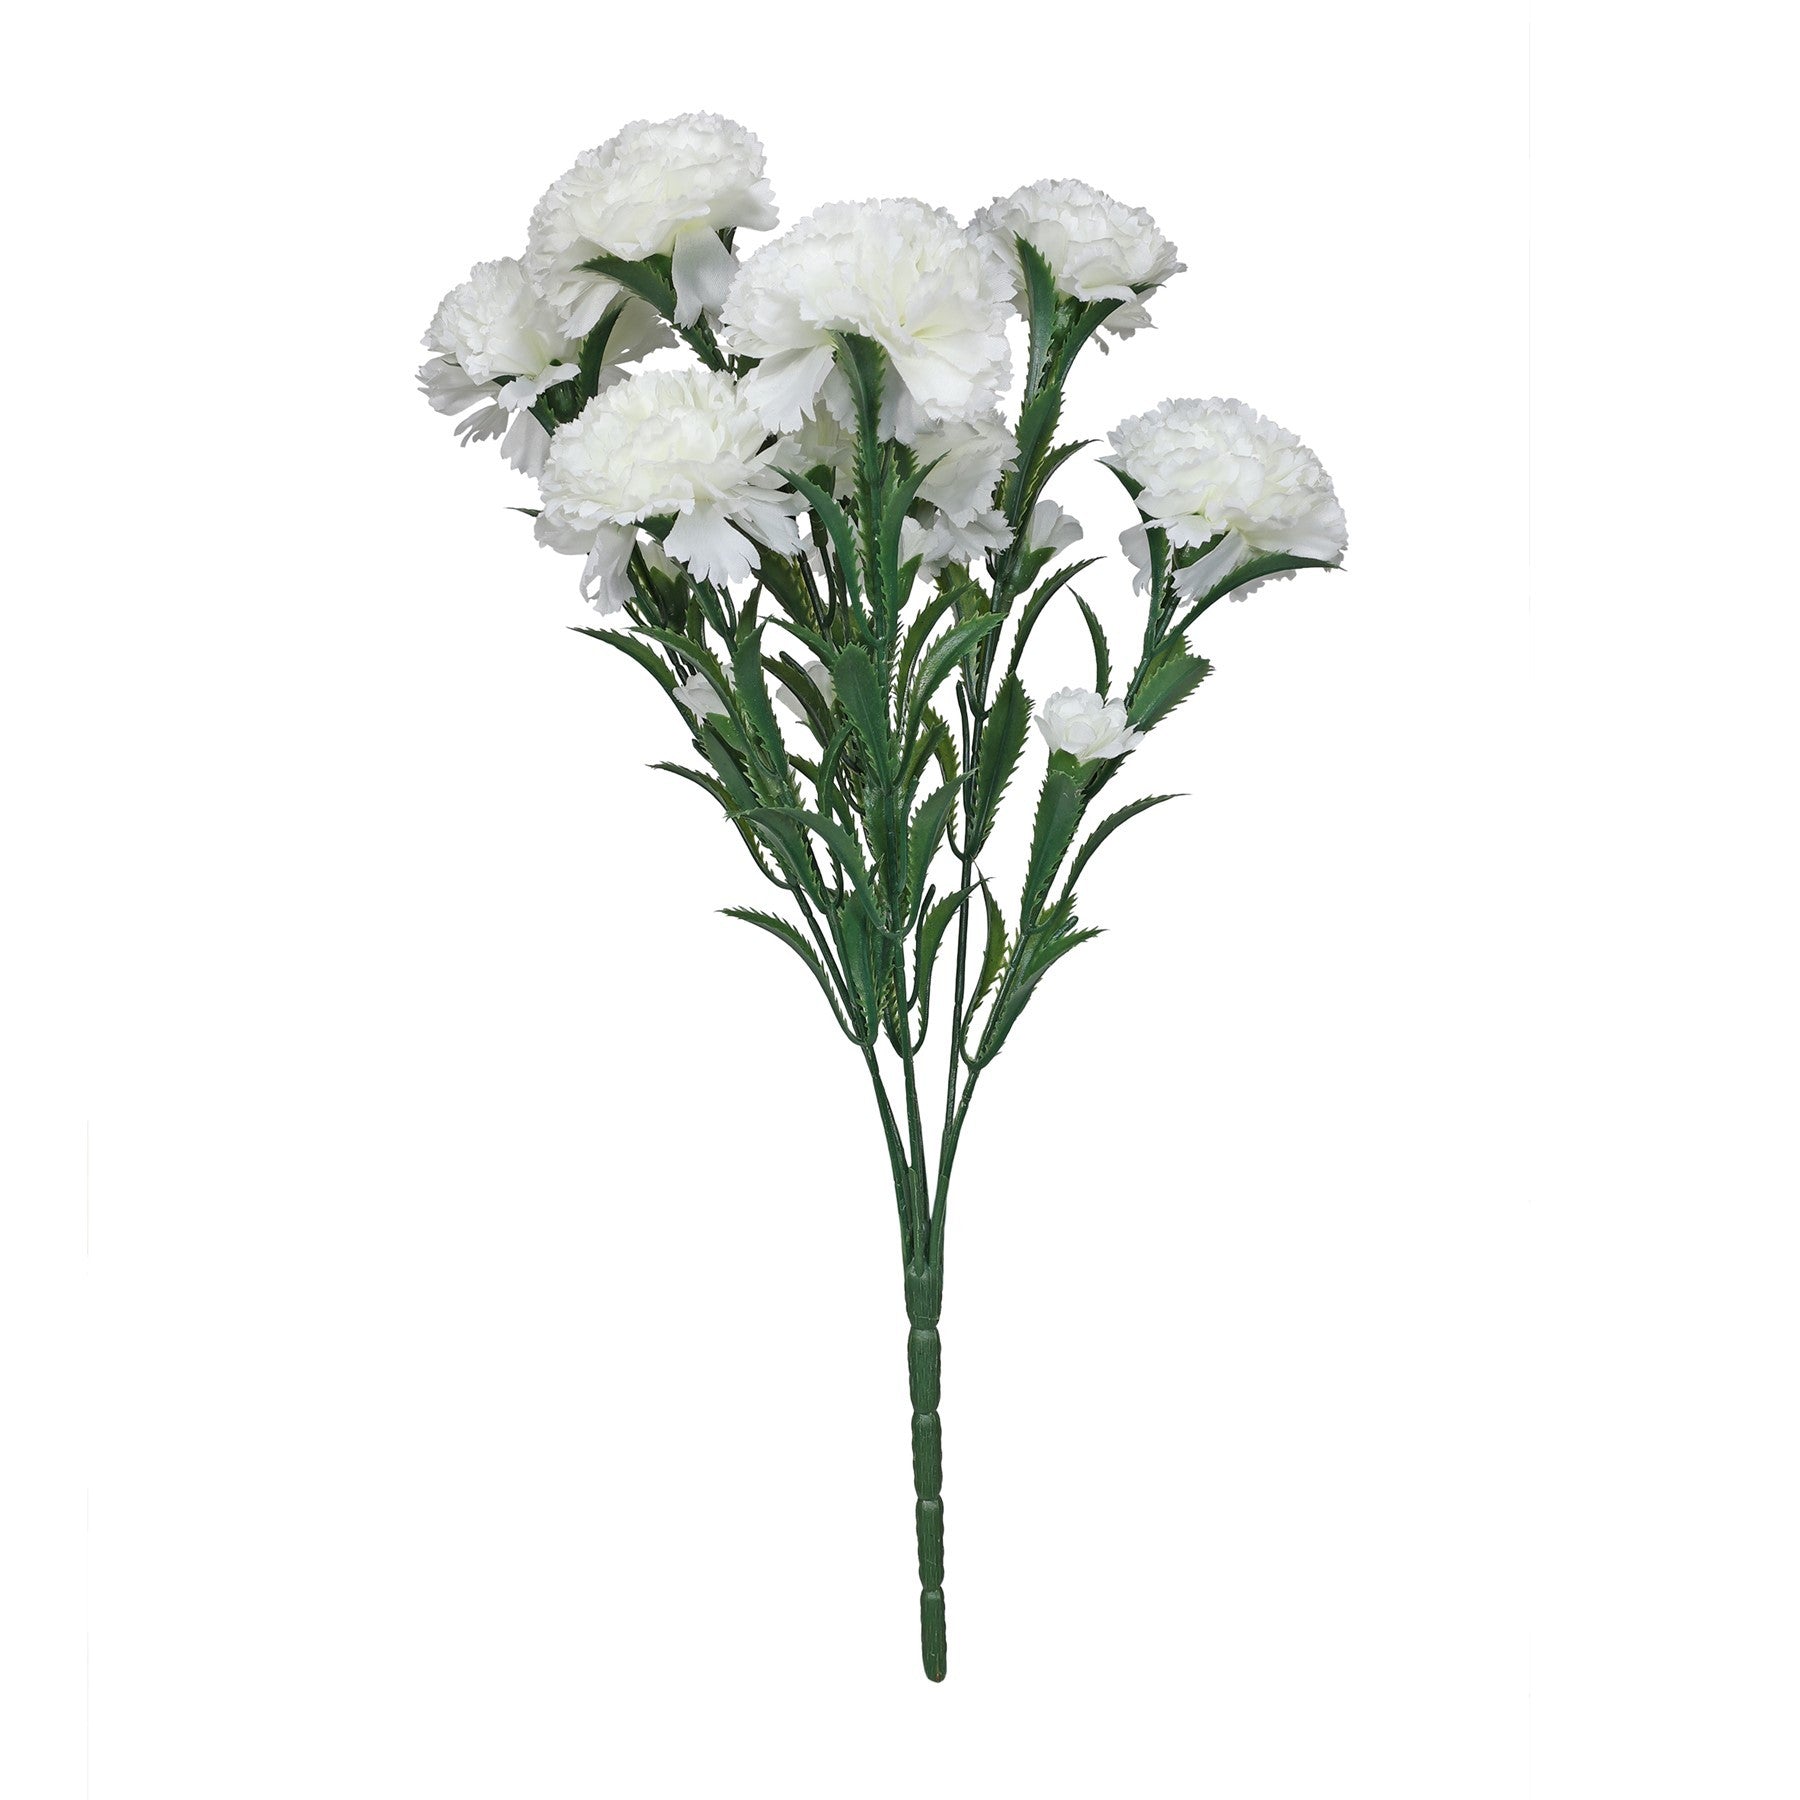 View Essential White Carnation Bunch information